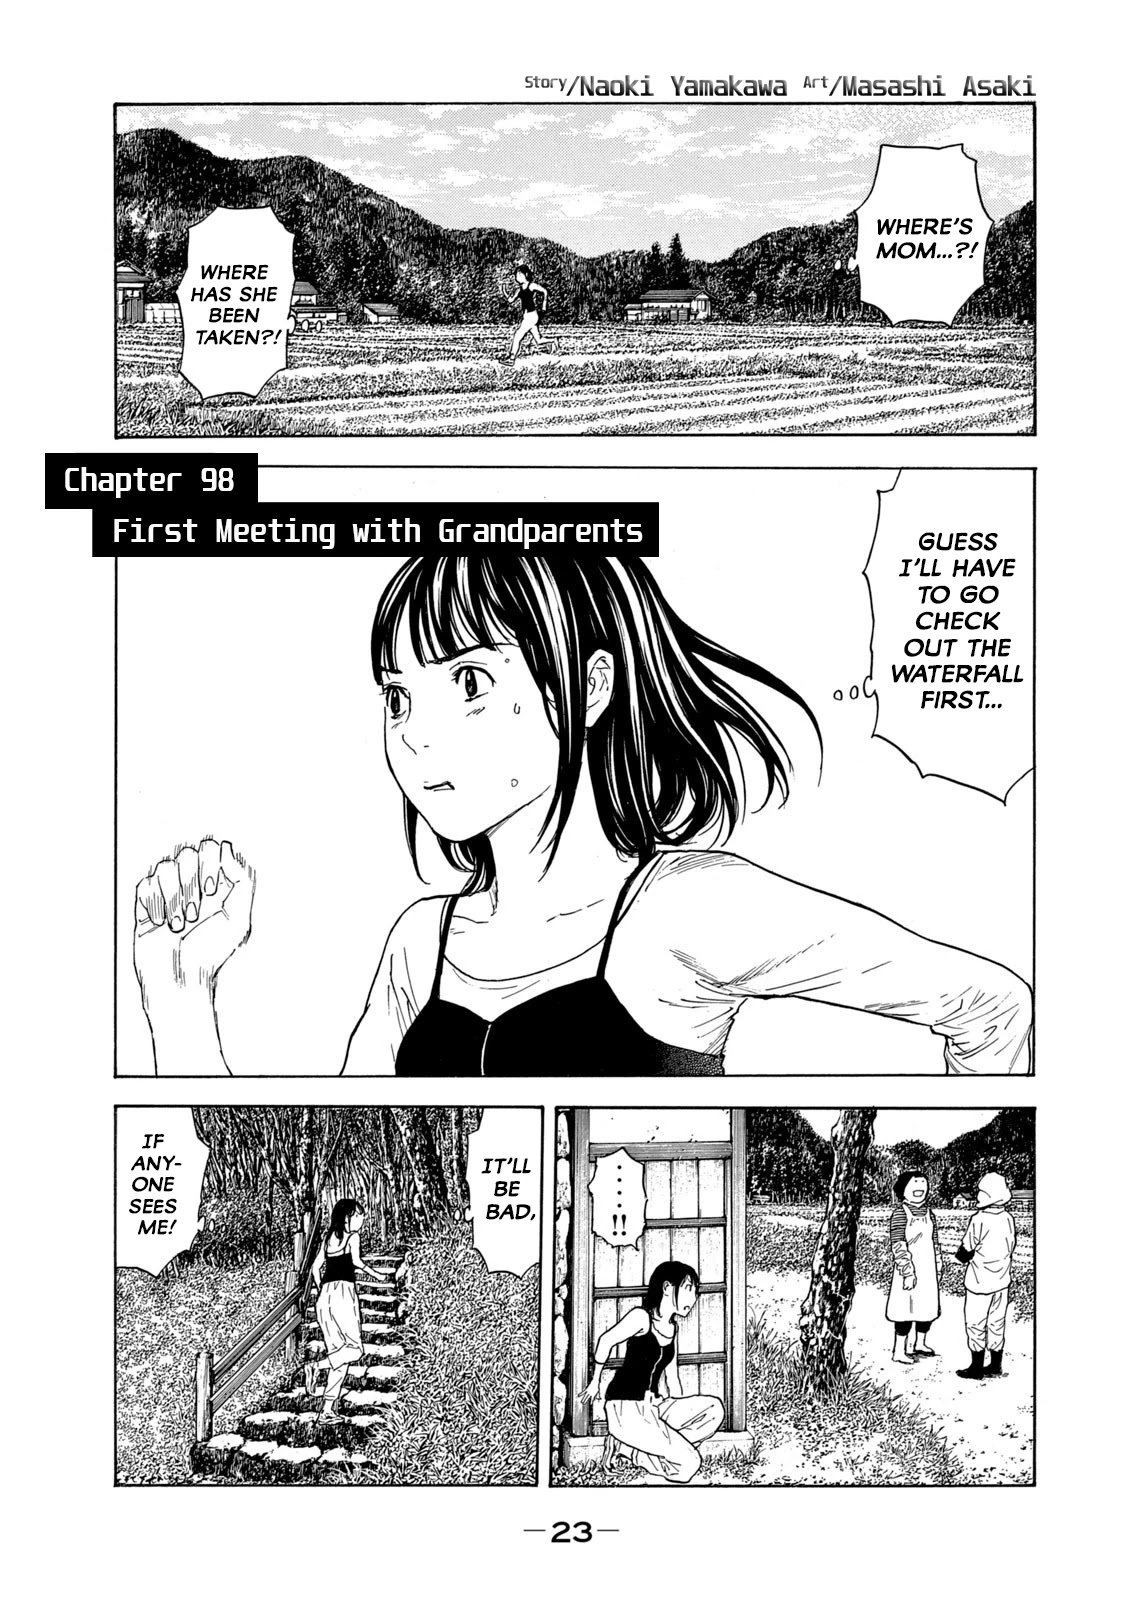 Read My Home Hero Manga English [New Chapters] Online Free - MangaClash